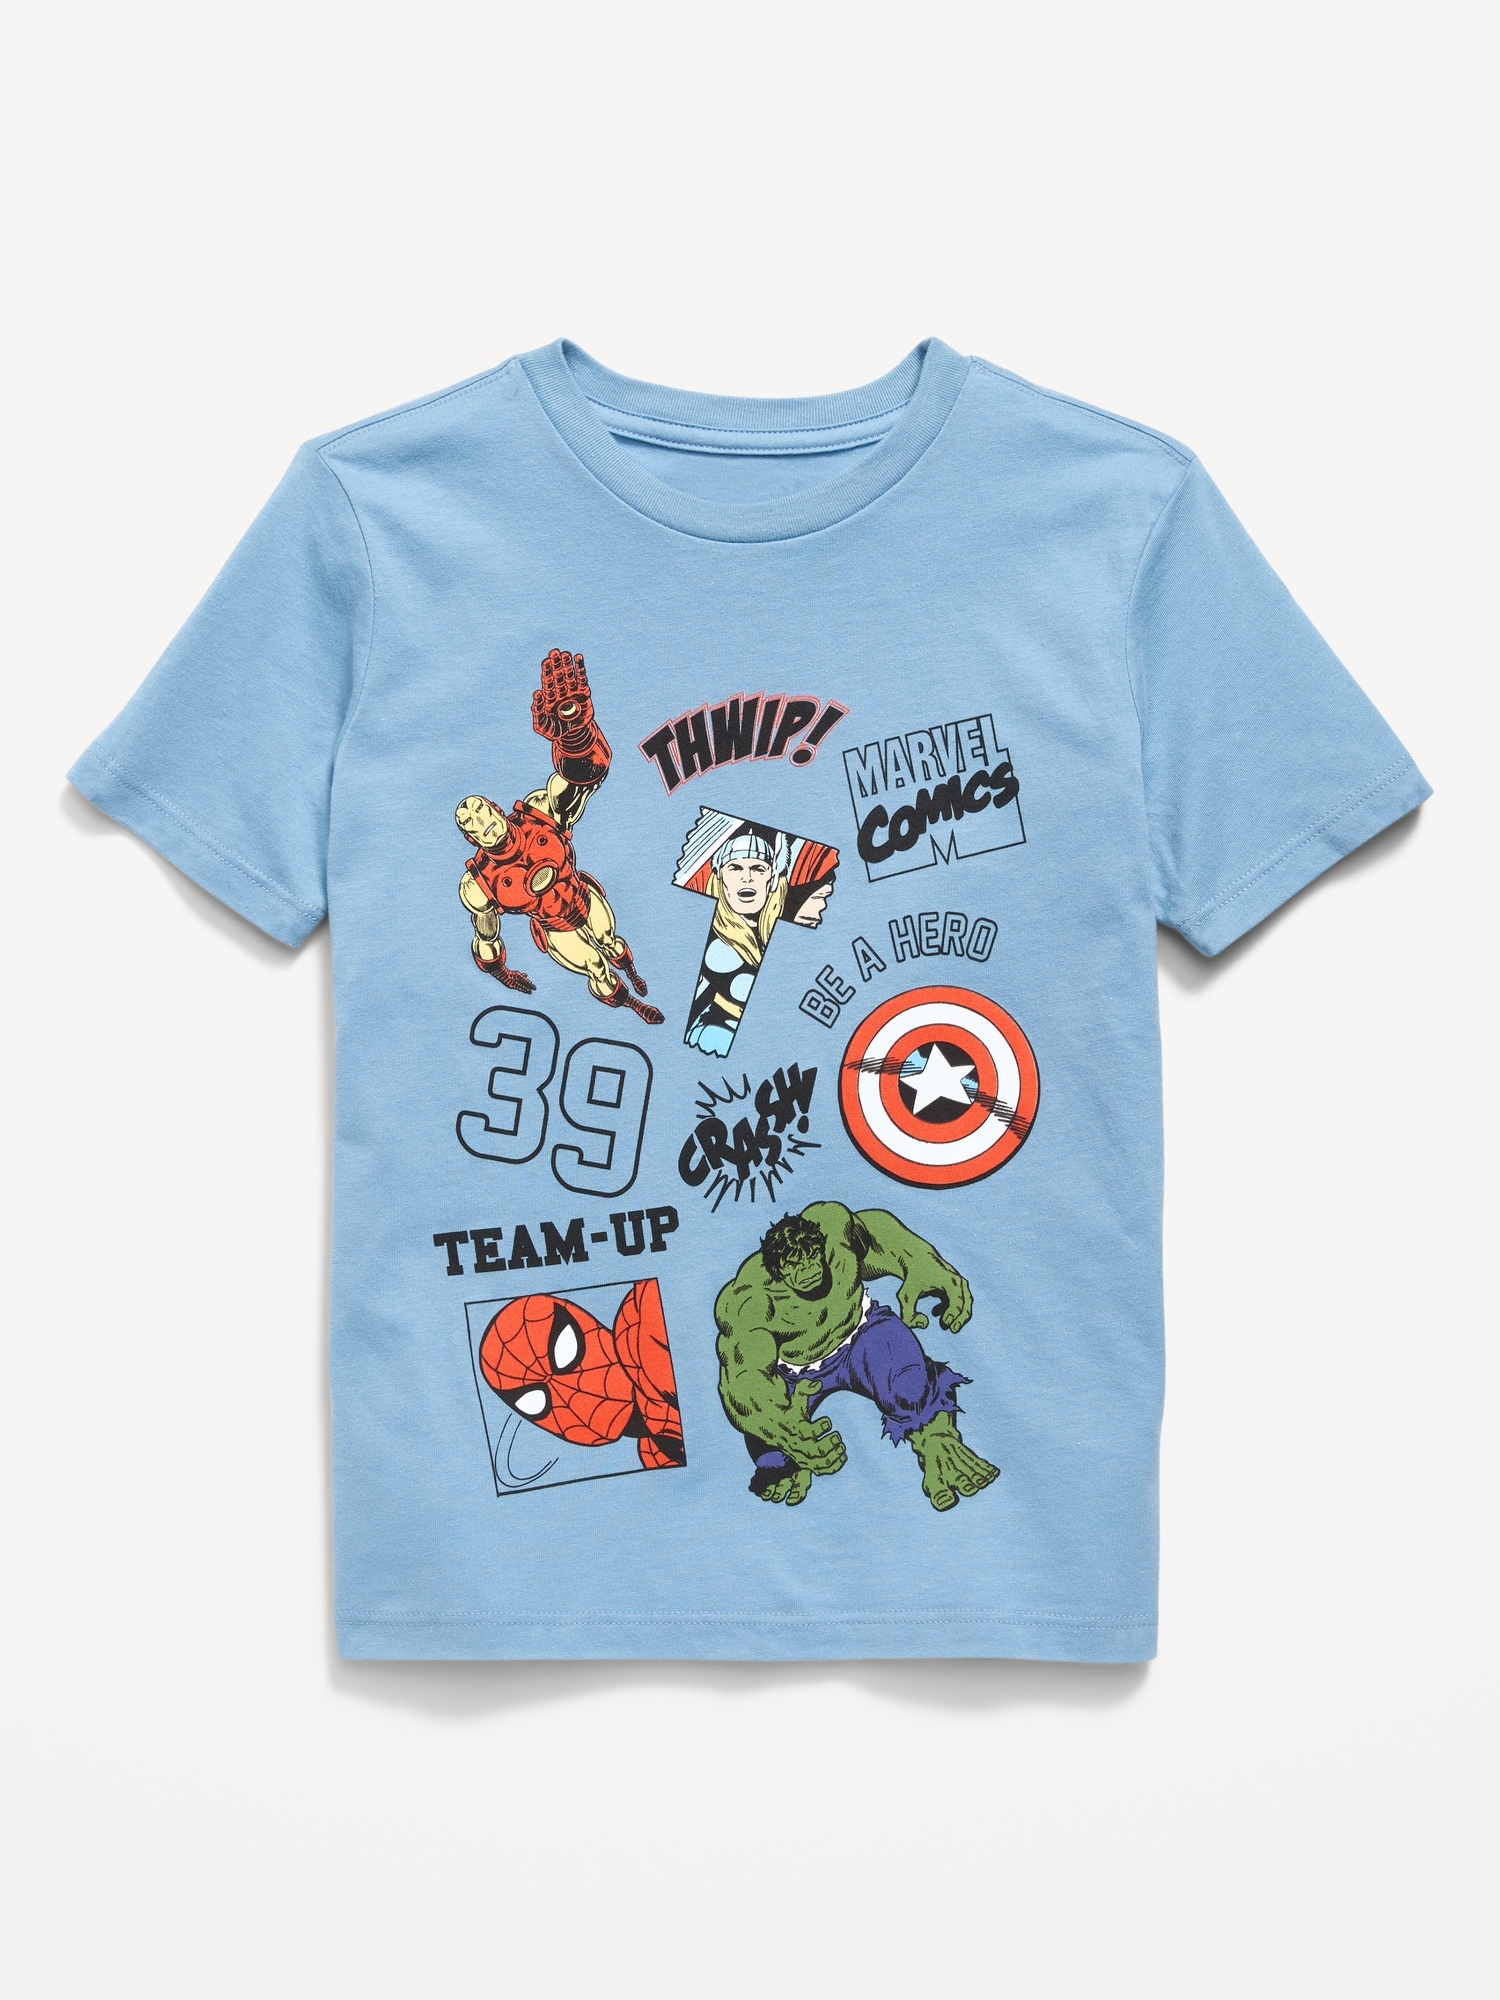 arvel Gender-Neutral Graphic T-Shirt for Kids